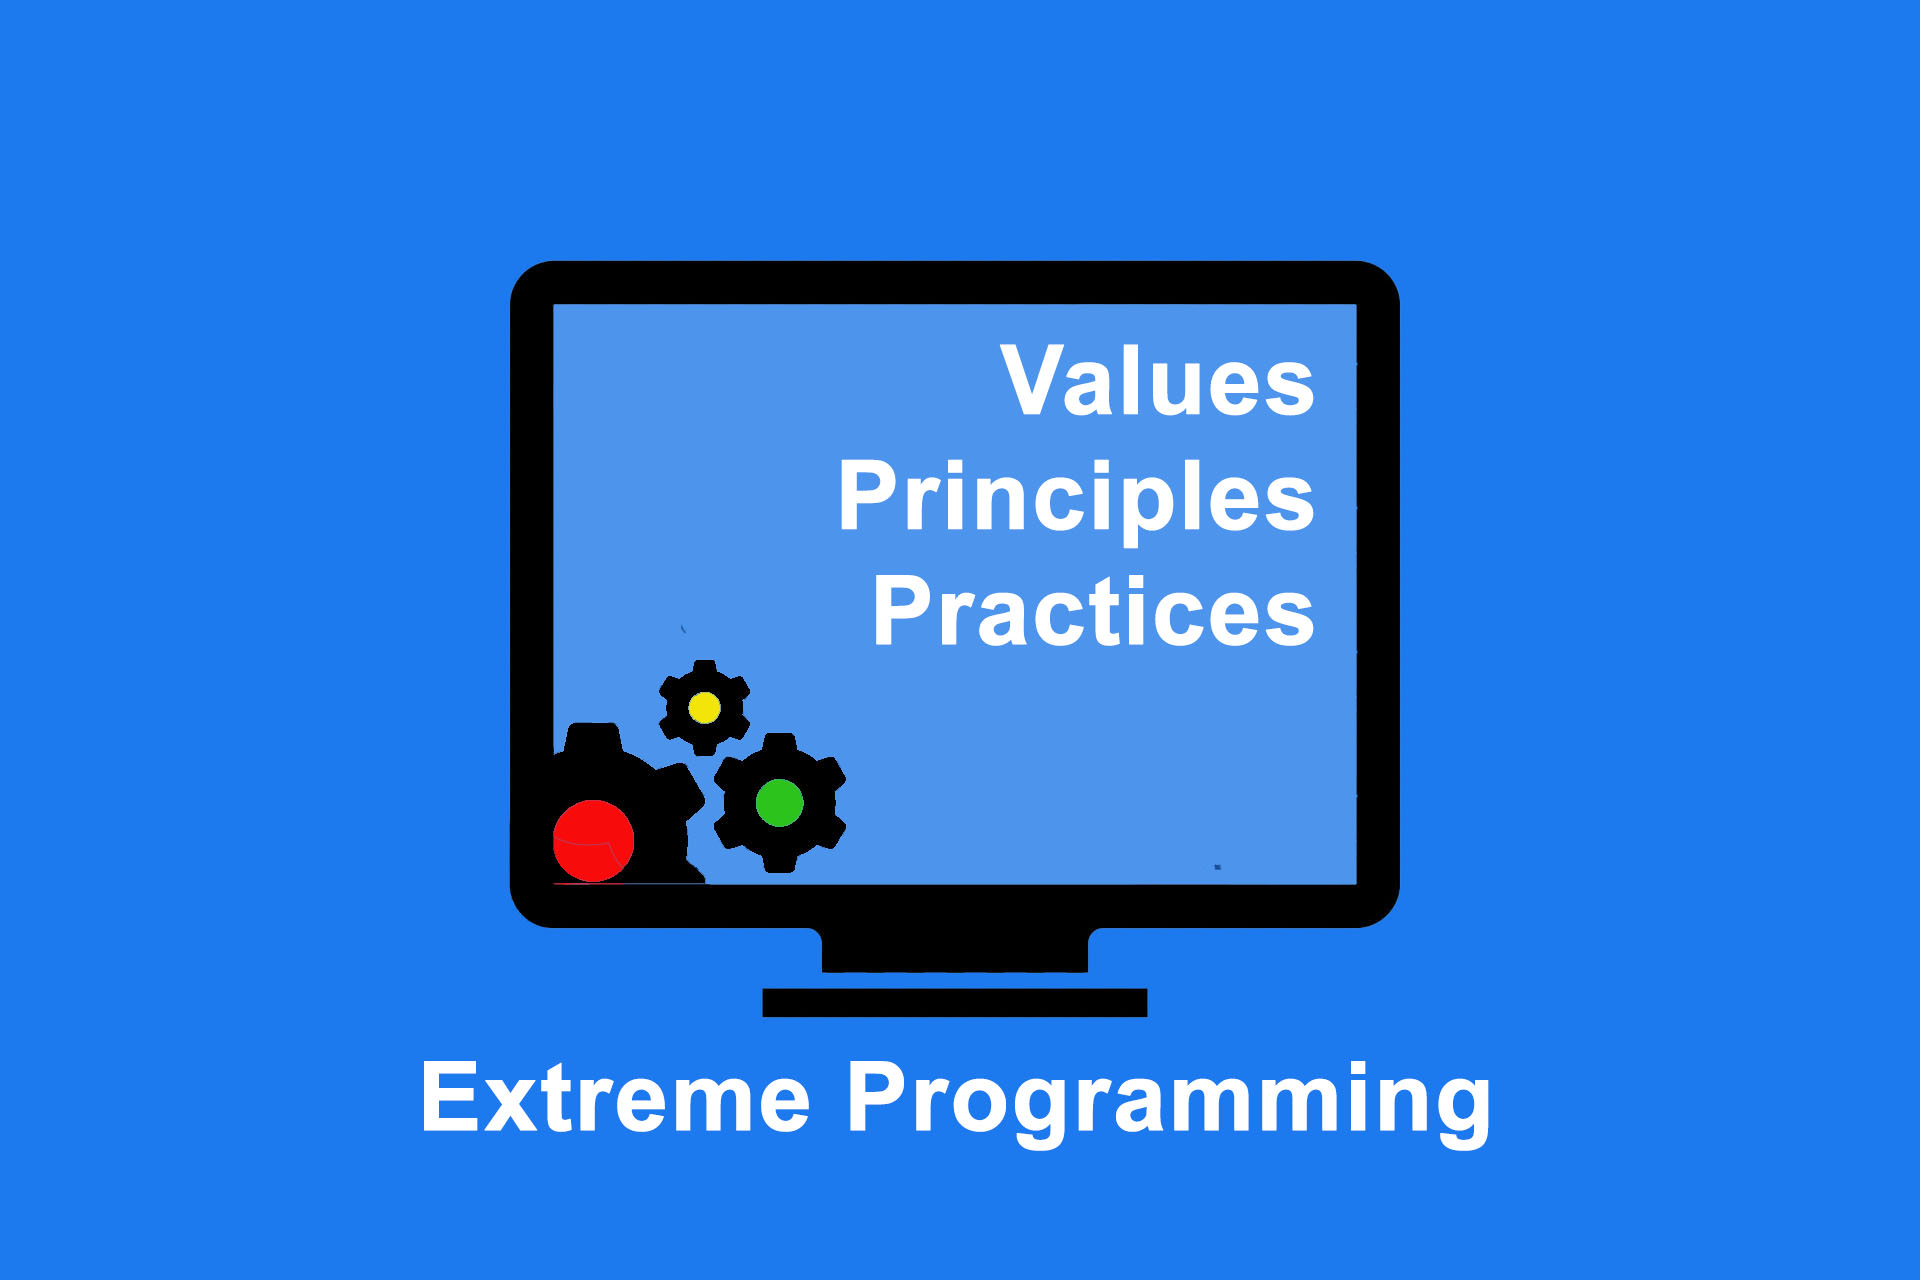 Smartpedia: What is Extreme Programming?